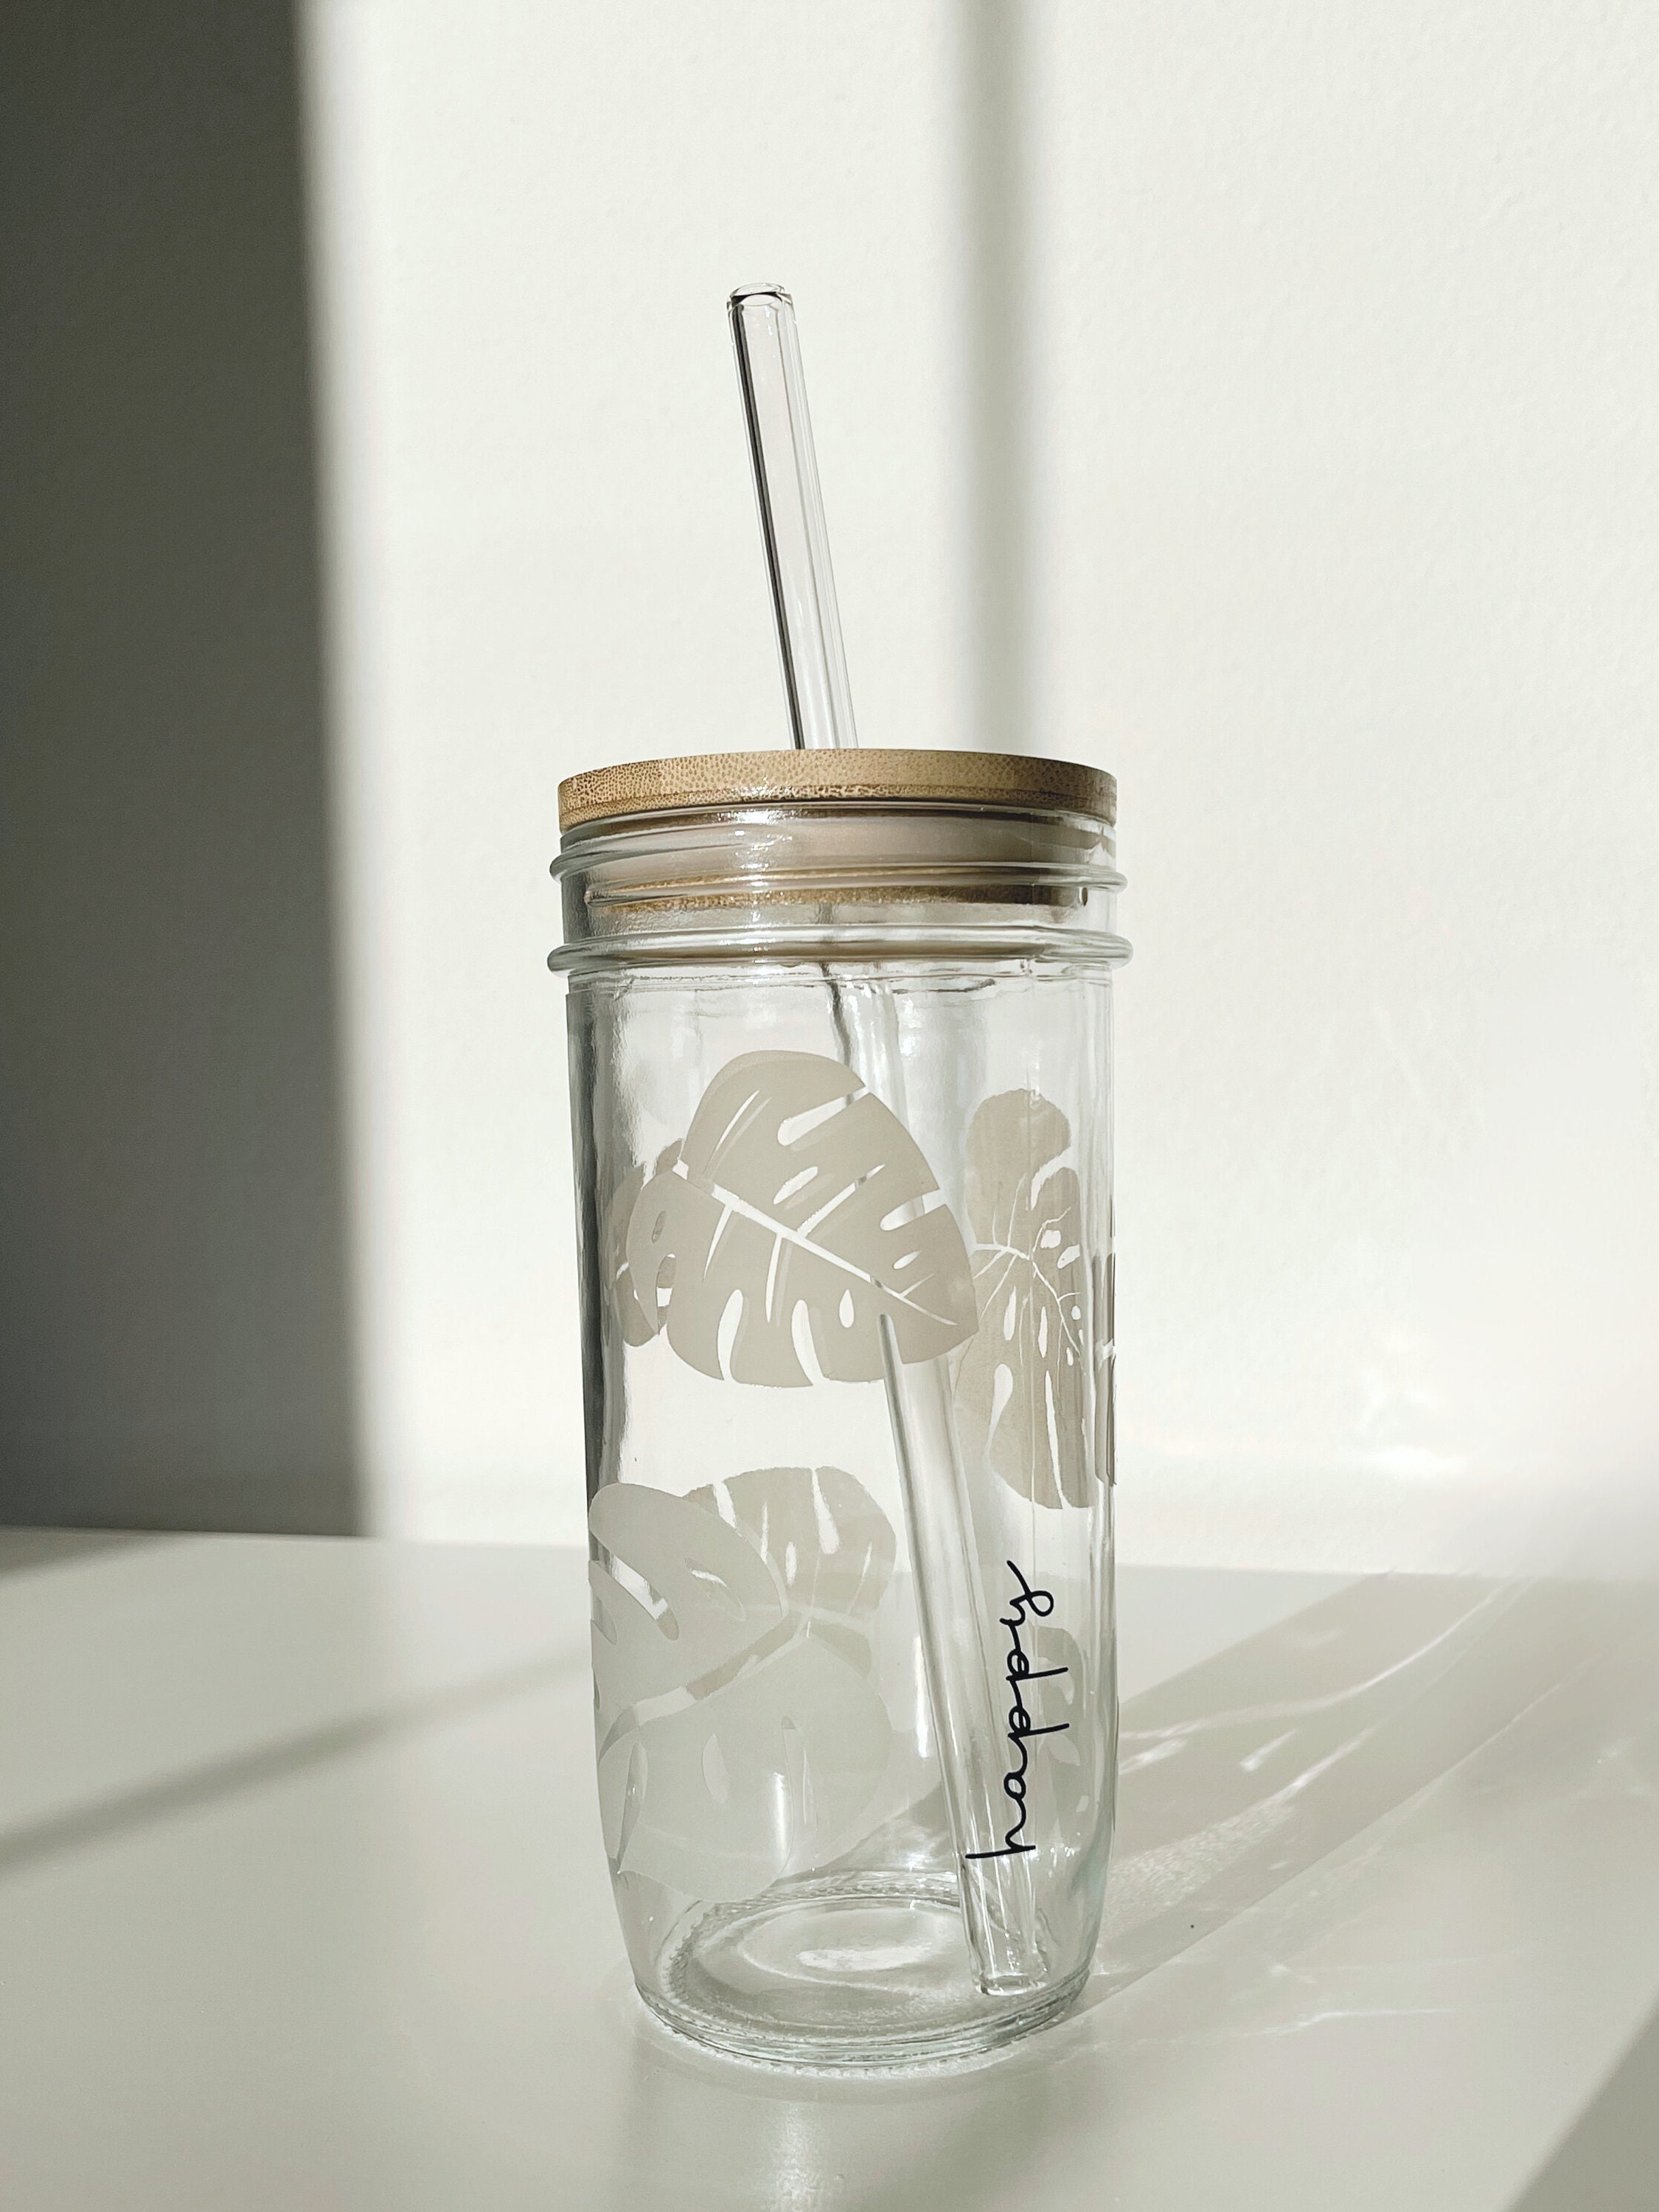 Boba tea Bubble milk tea Glass Cup Mug Jar – AsianInspiredBtq